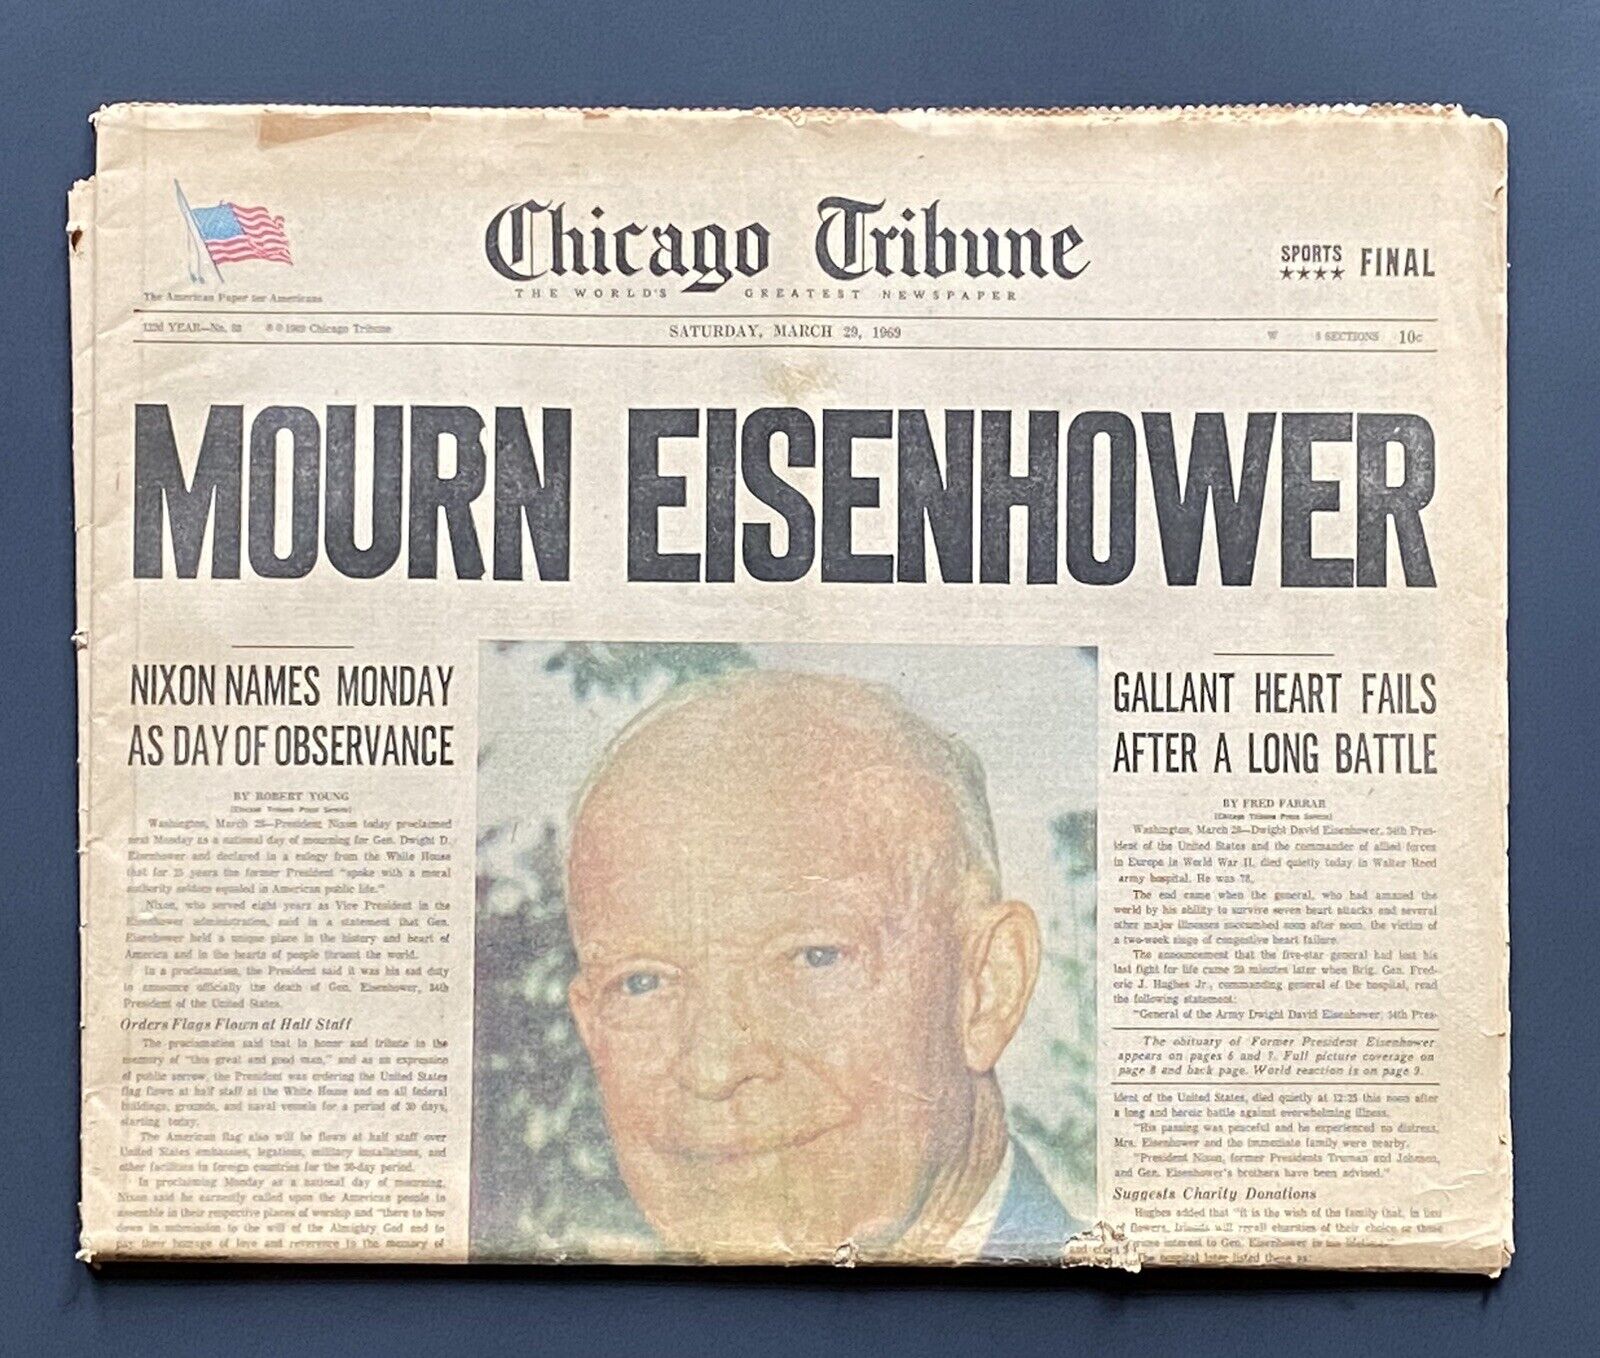 1969 Dwight Eisenhower Passes Away 3/29/69 Chicago Tribune Mourning Newspaper